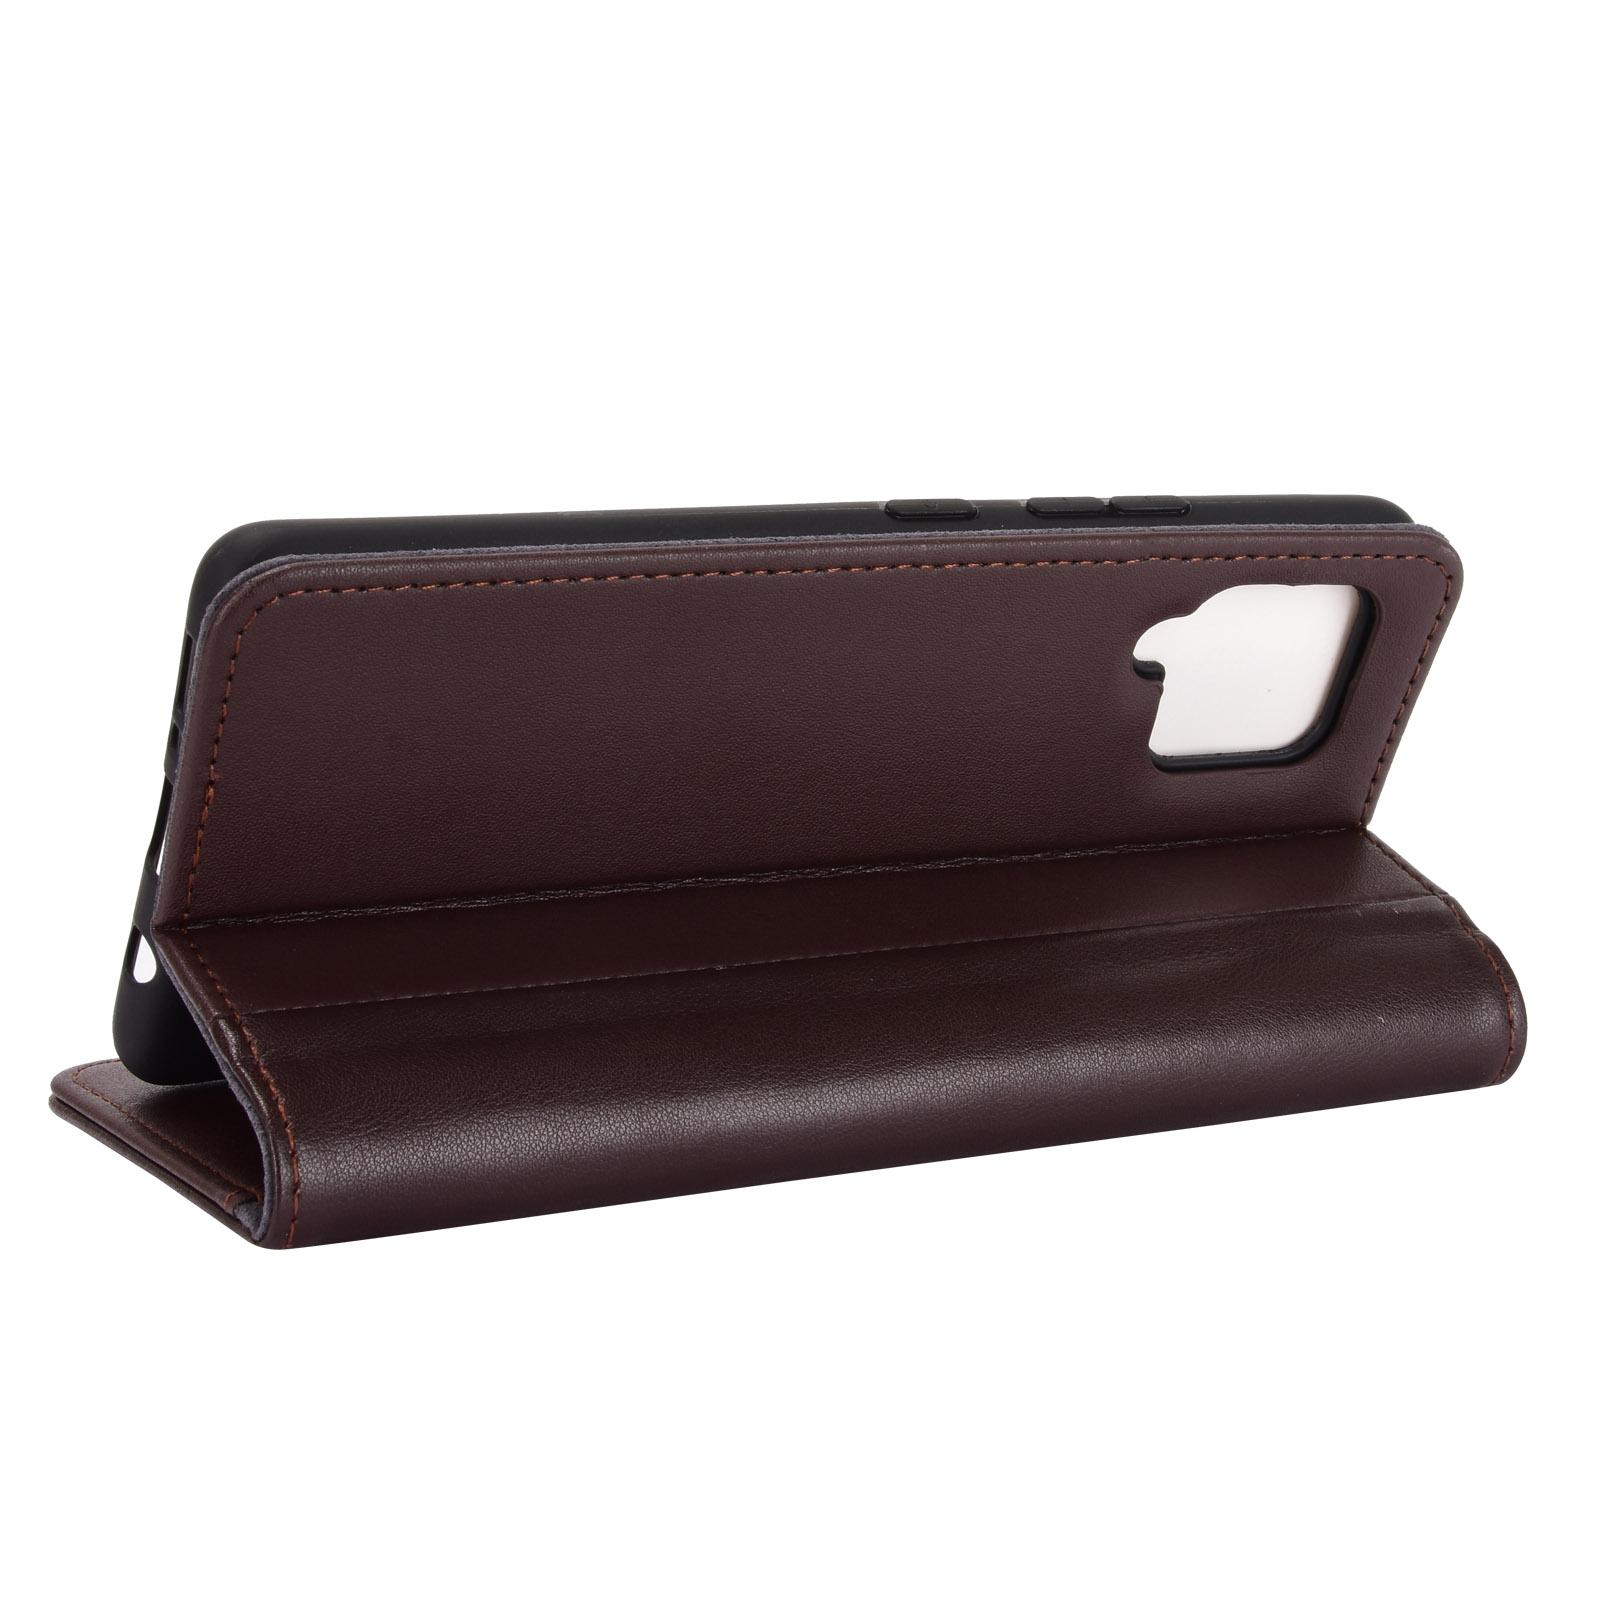 Samsung Galaxy A42 Genuine Leather Wallet Case Brown